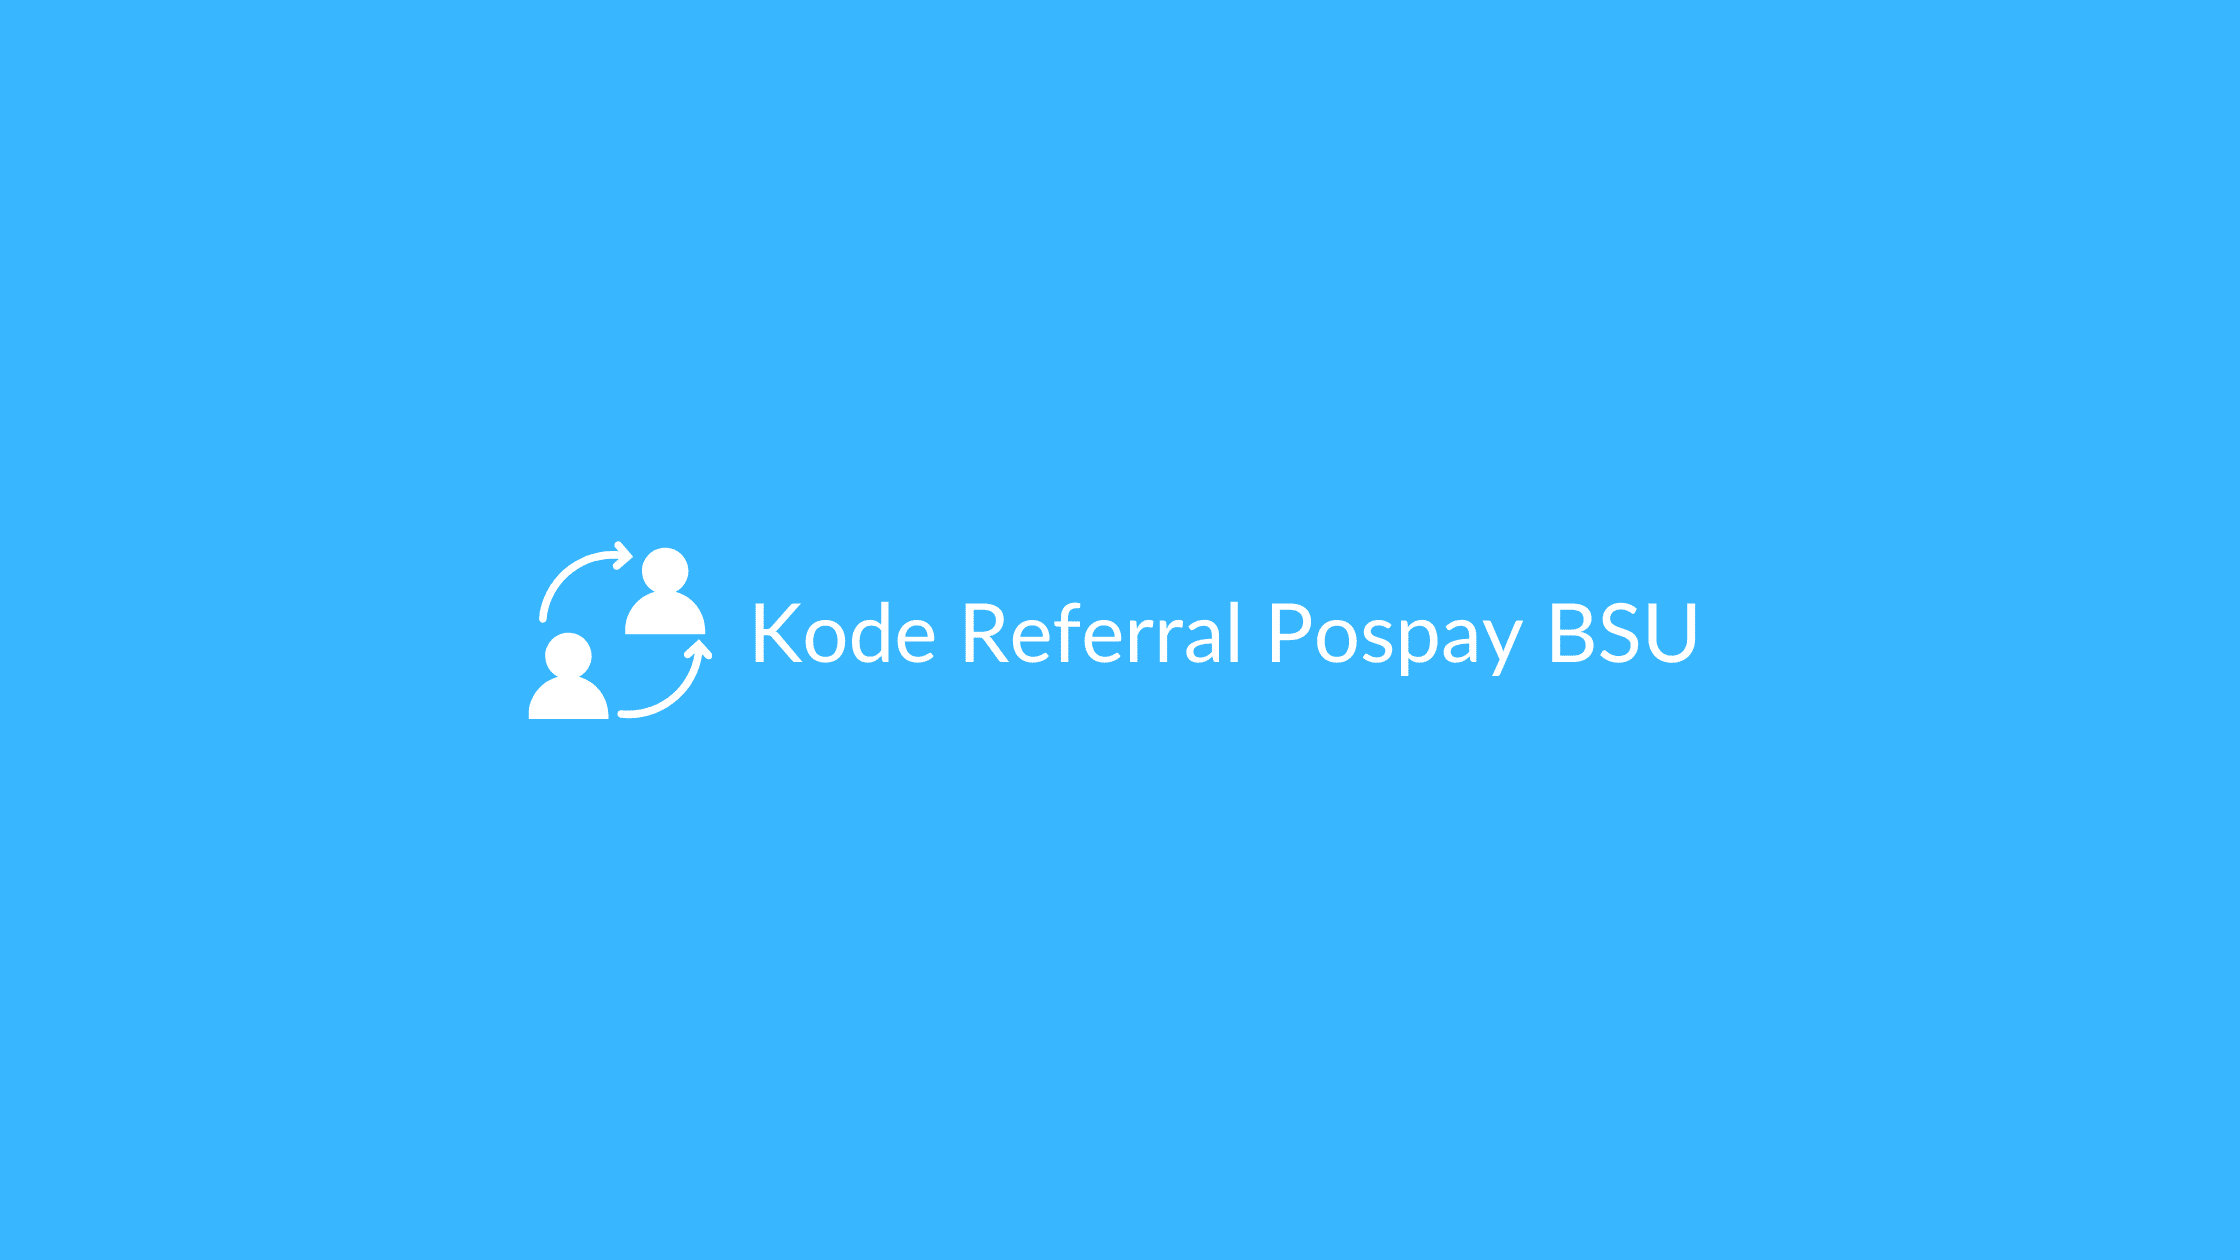 Kode Referral Pospay BSU